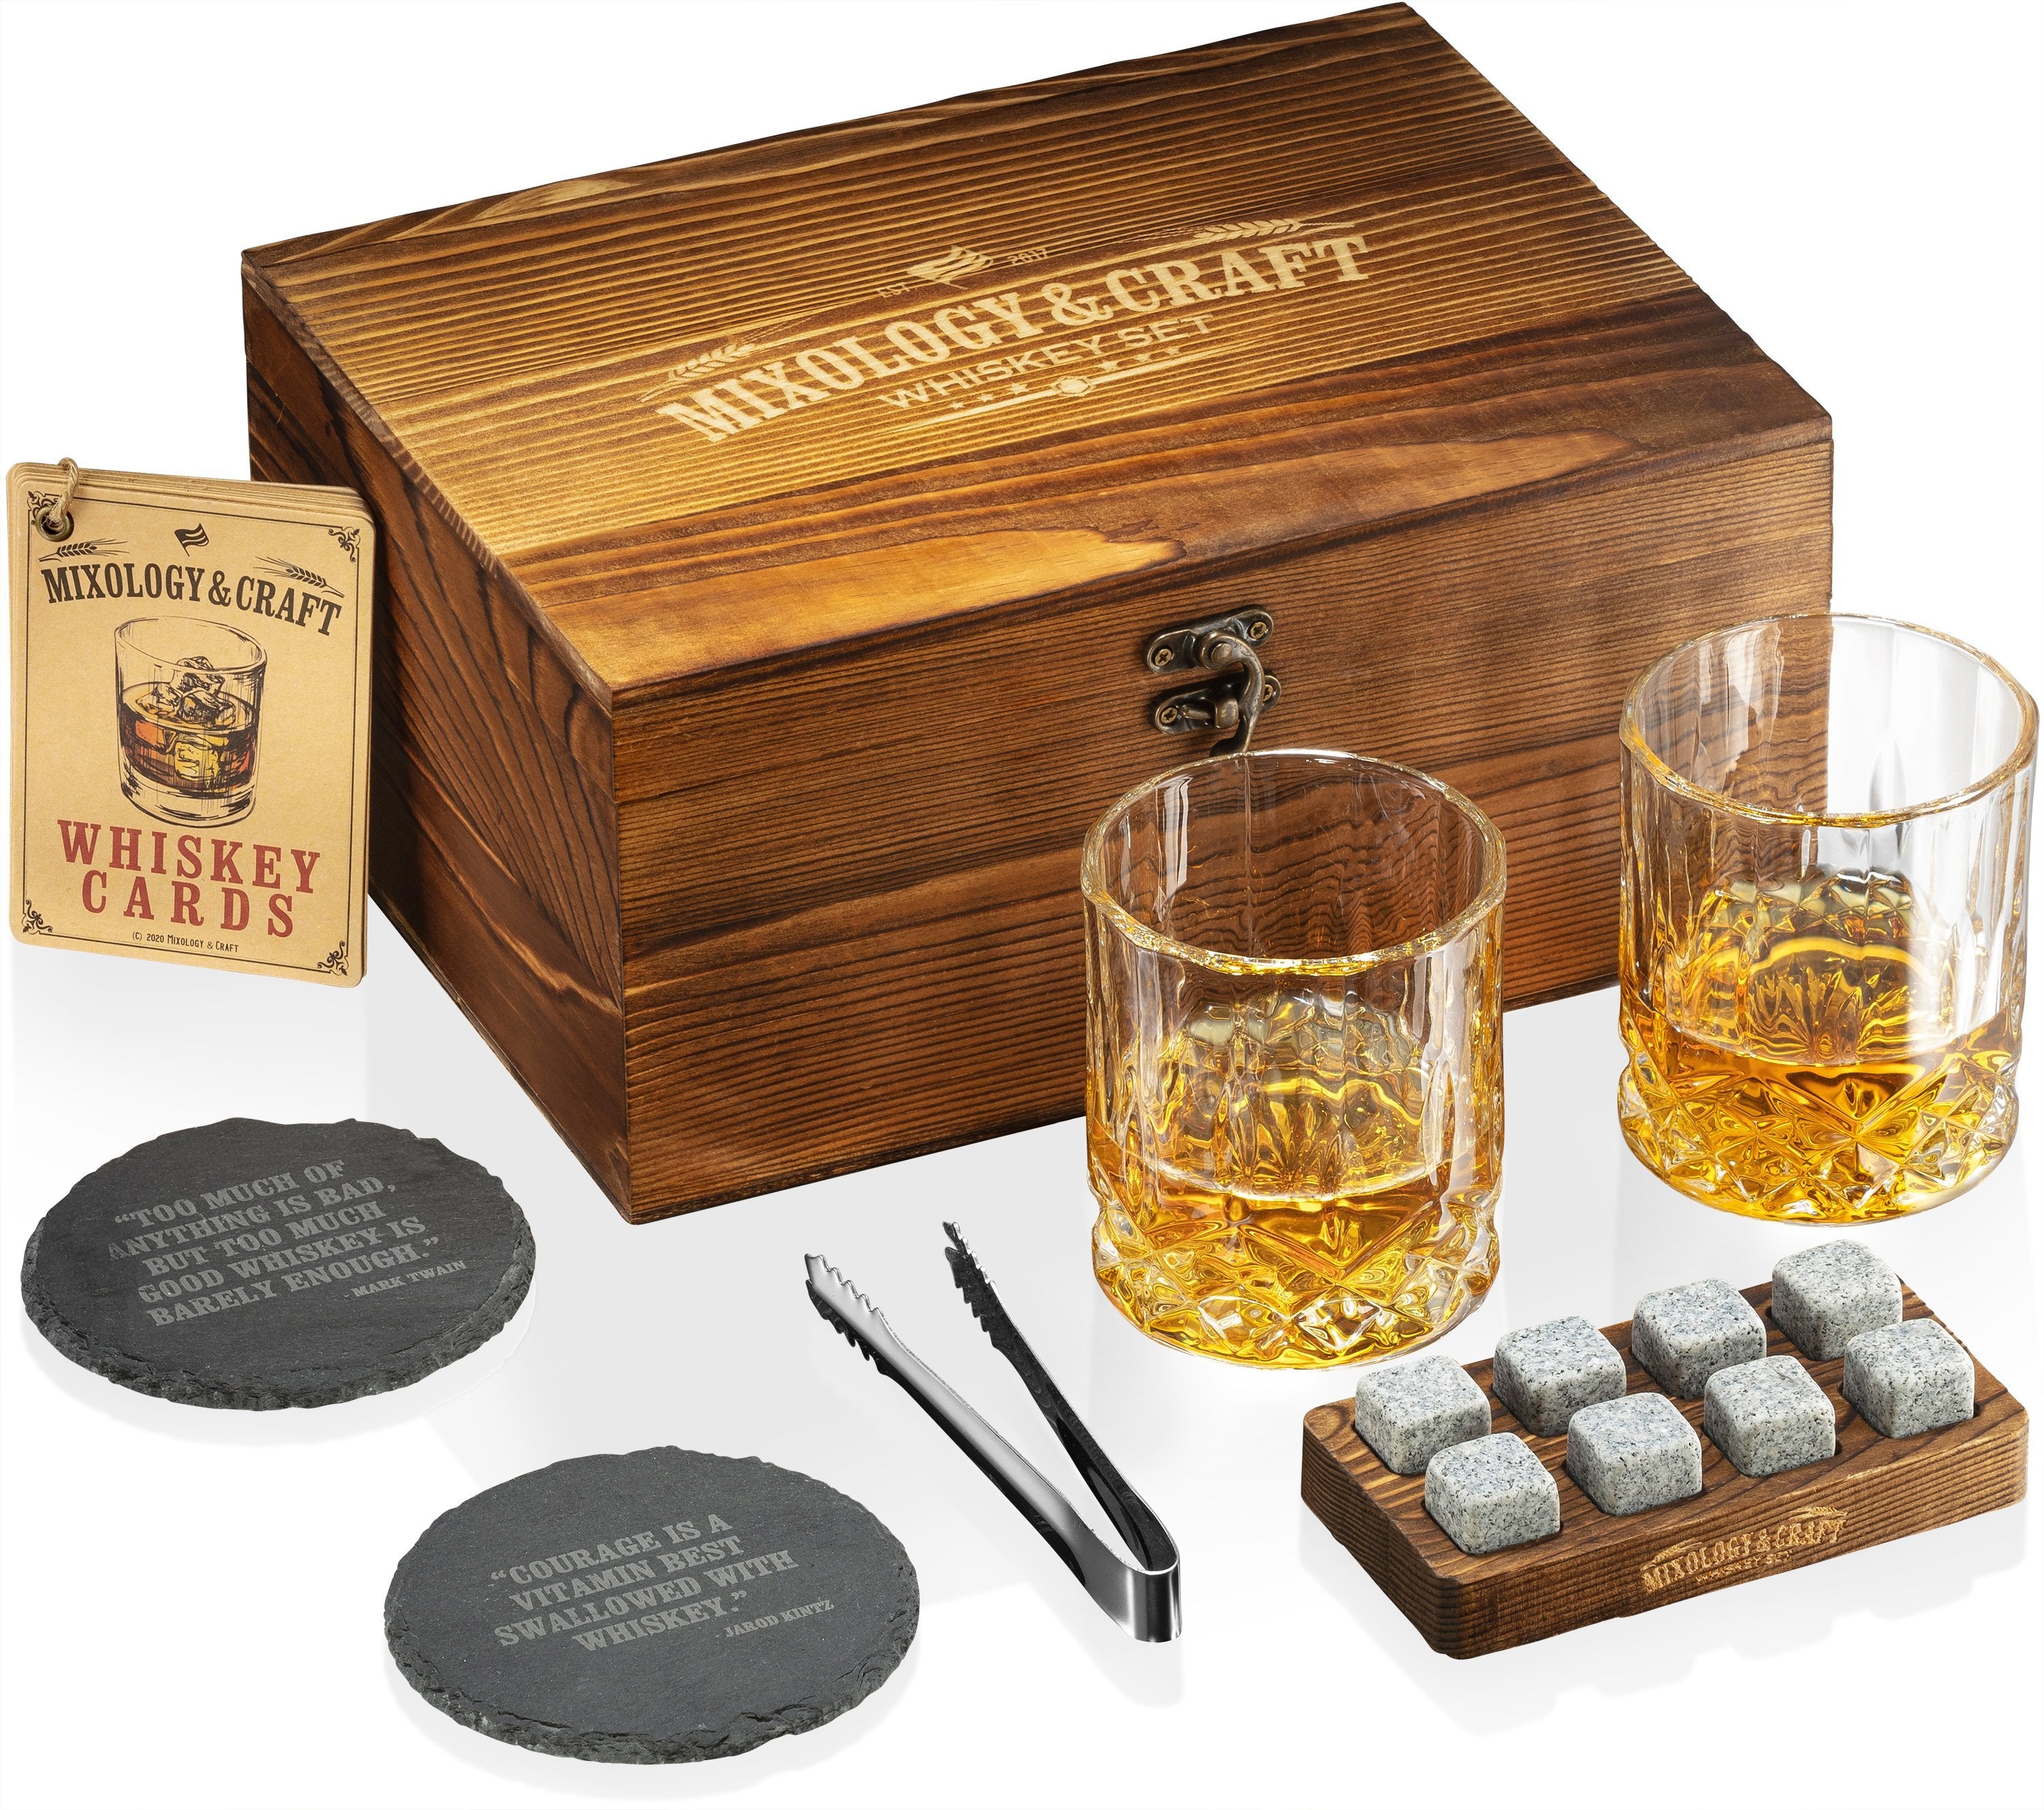 Whiskey Glasses Gift Set for Men & Women | Whiskey Glass & Stone Set with Wooden Box | Mixology & Craft